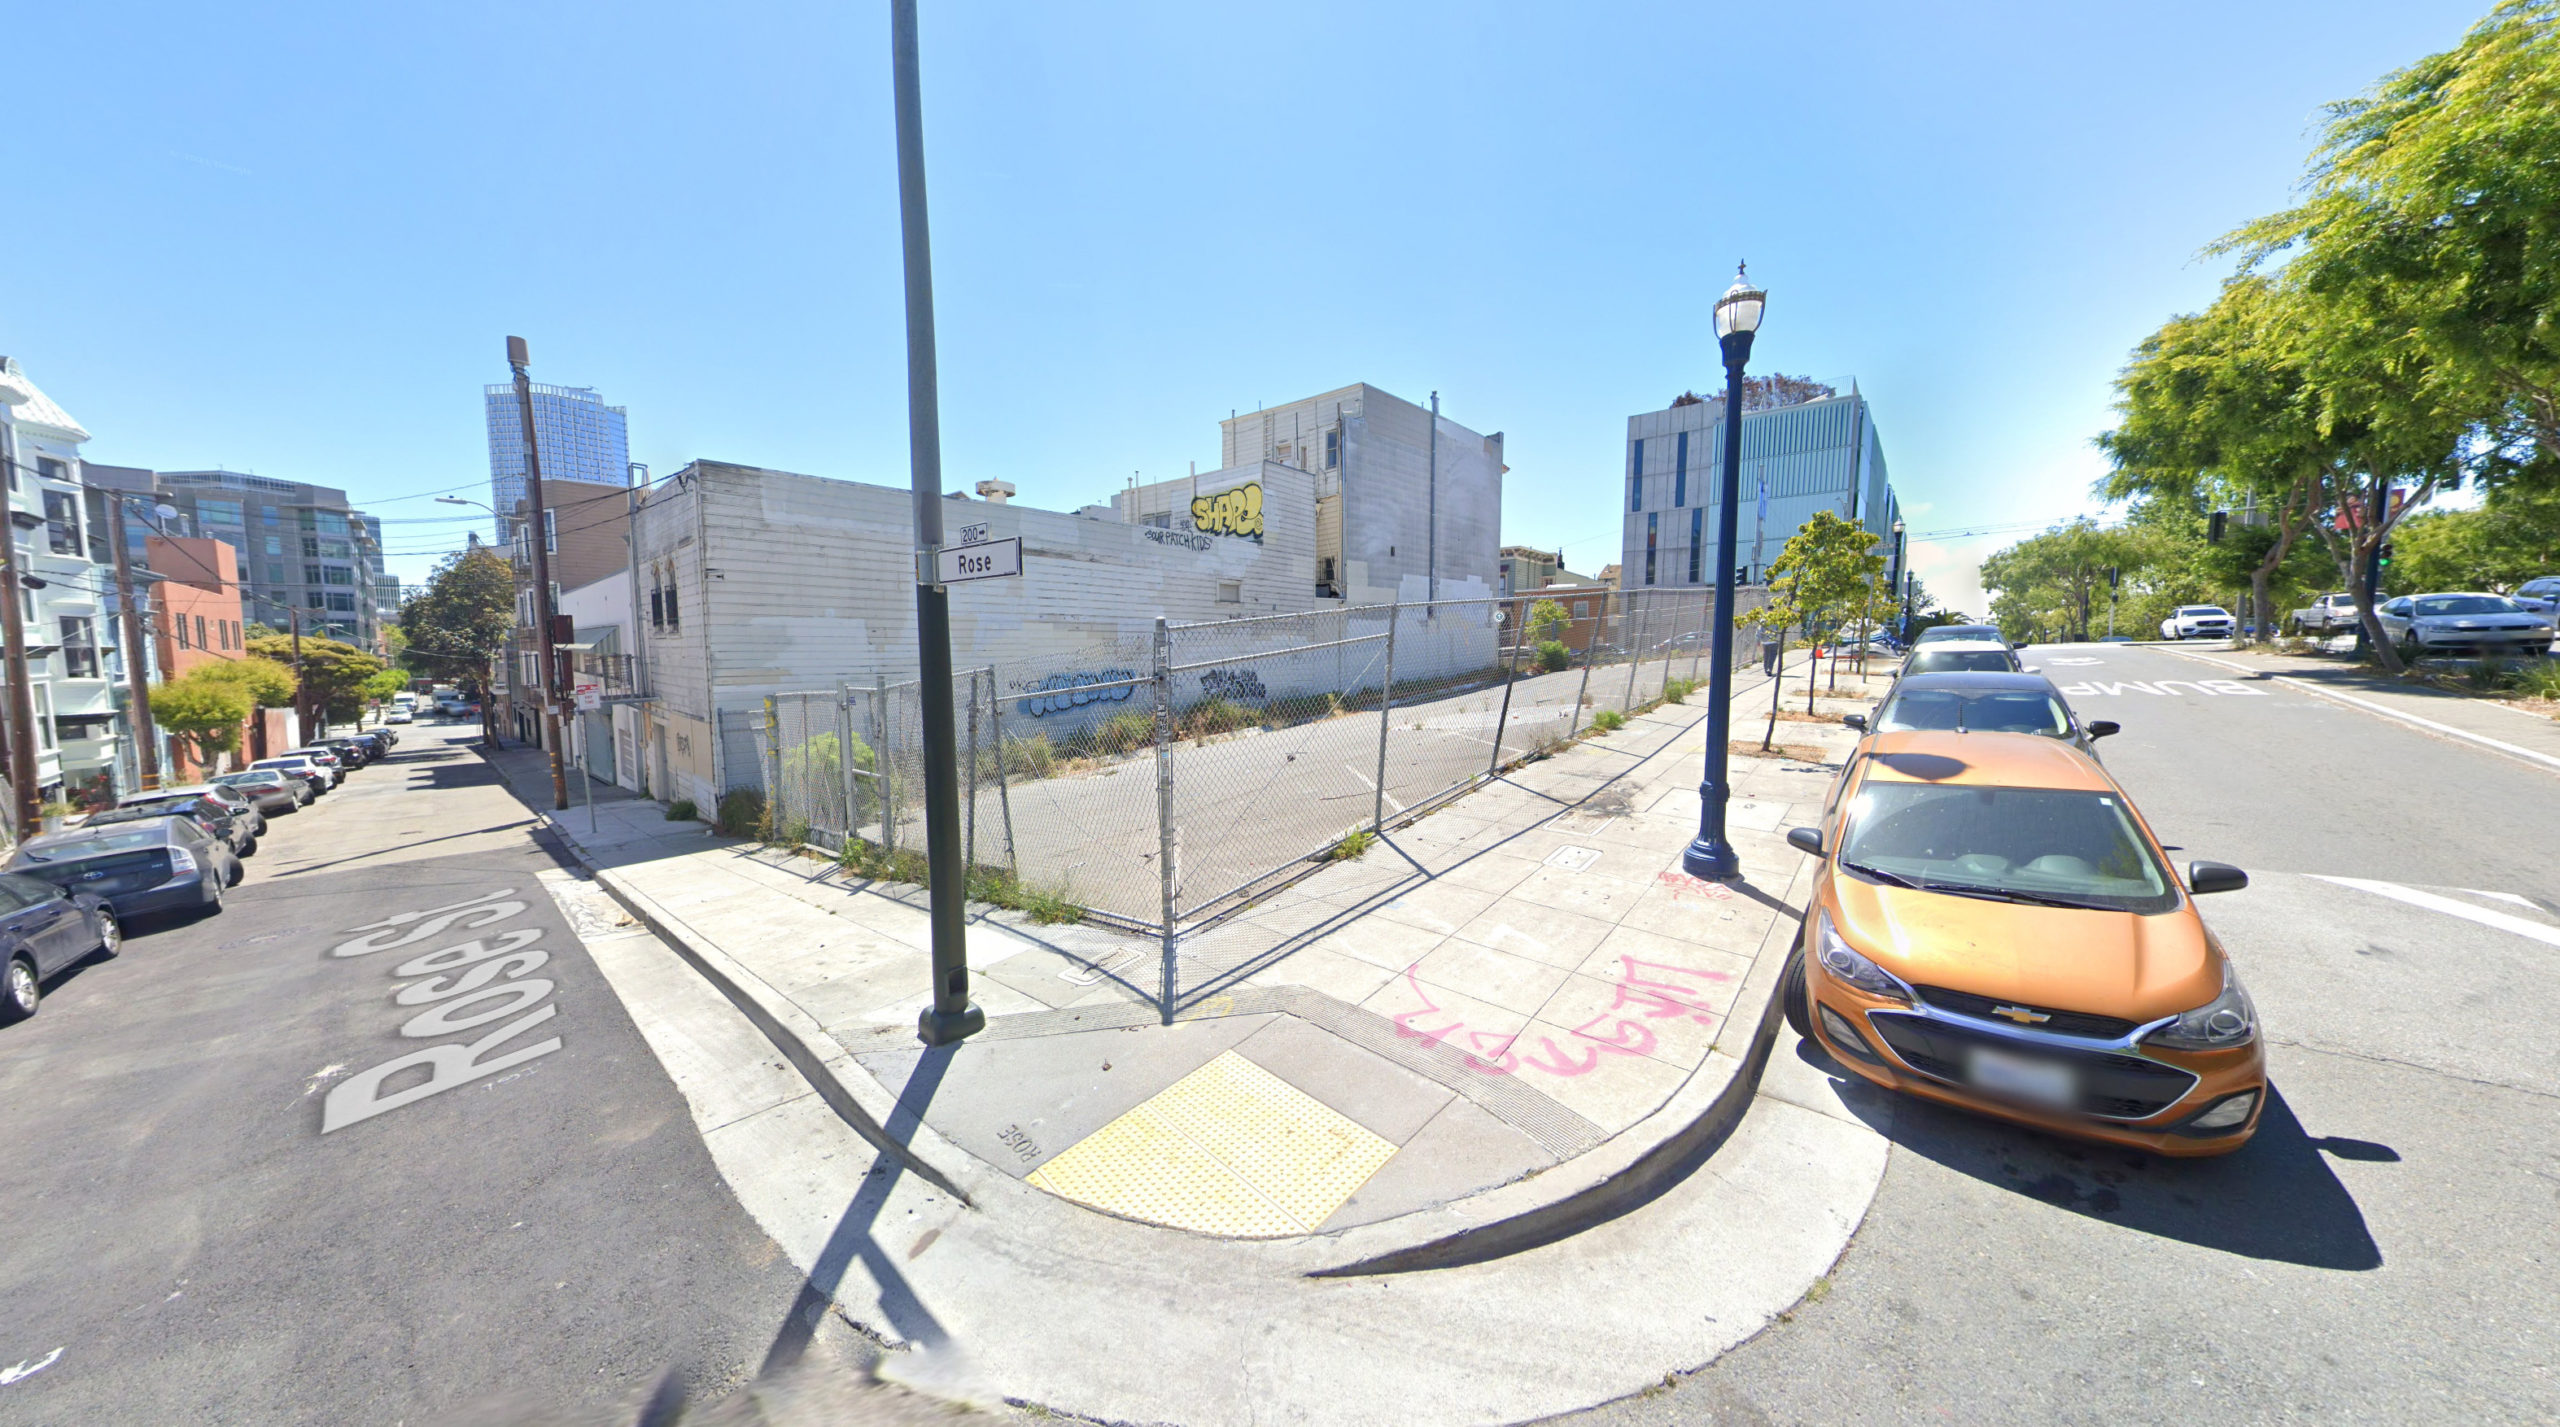 78 Haight Street from Octavia and Rose Street, image via Google Street View